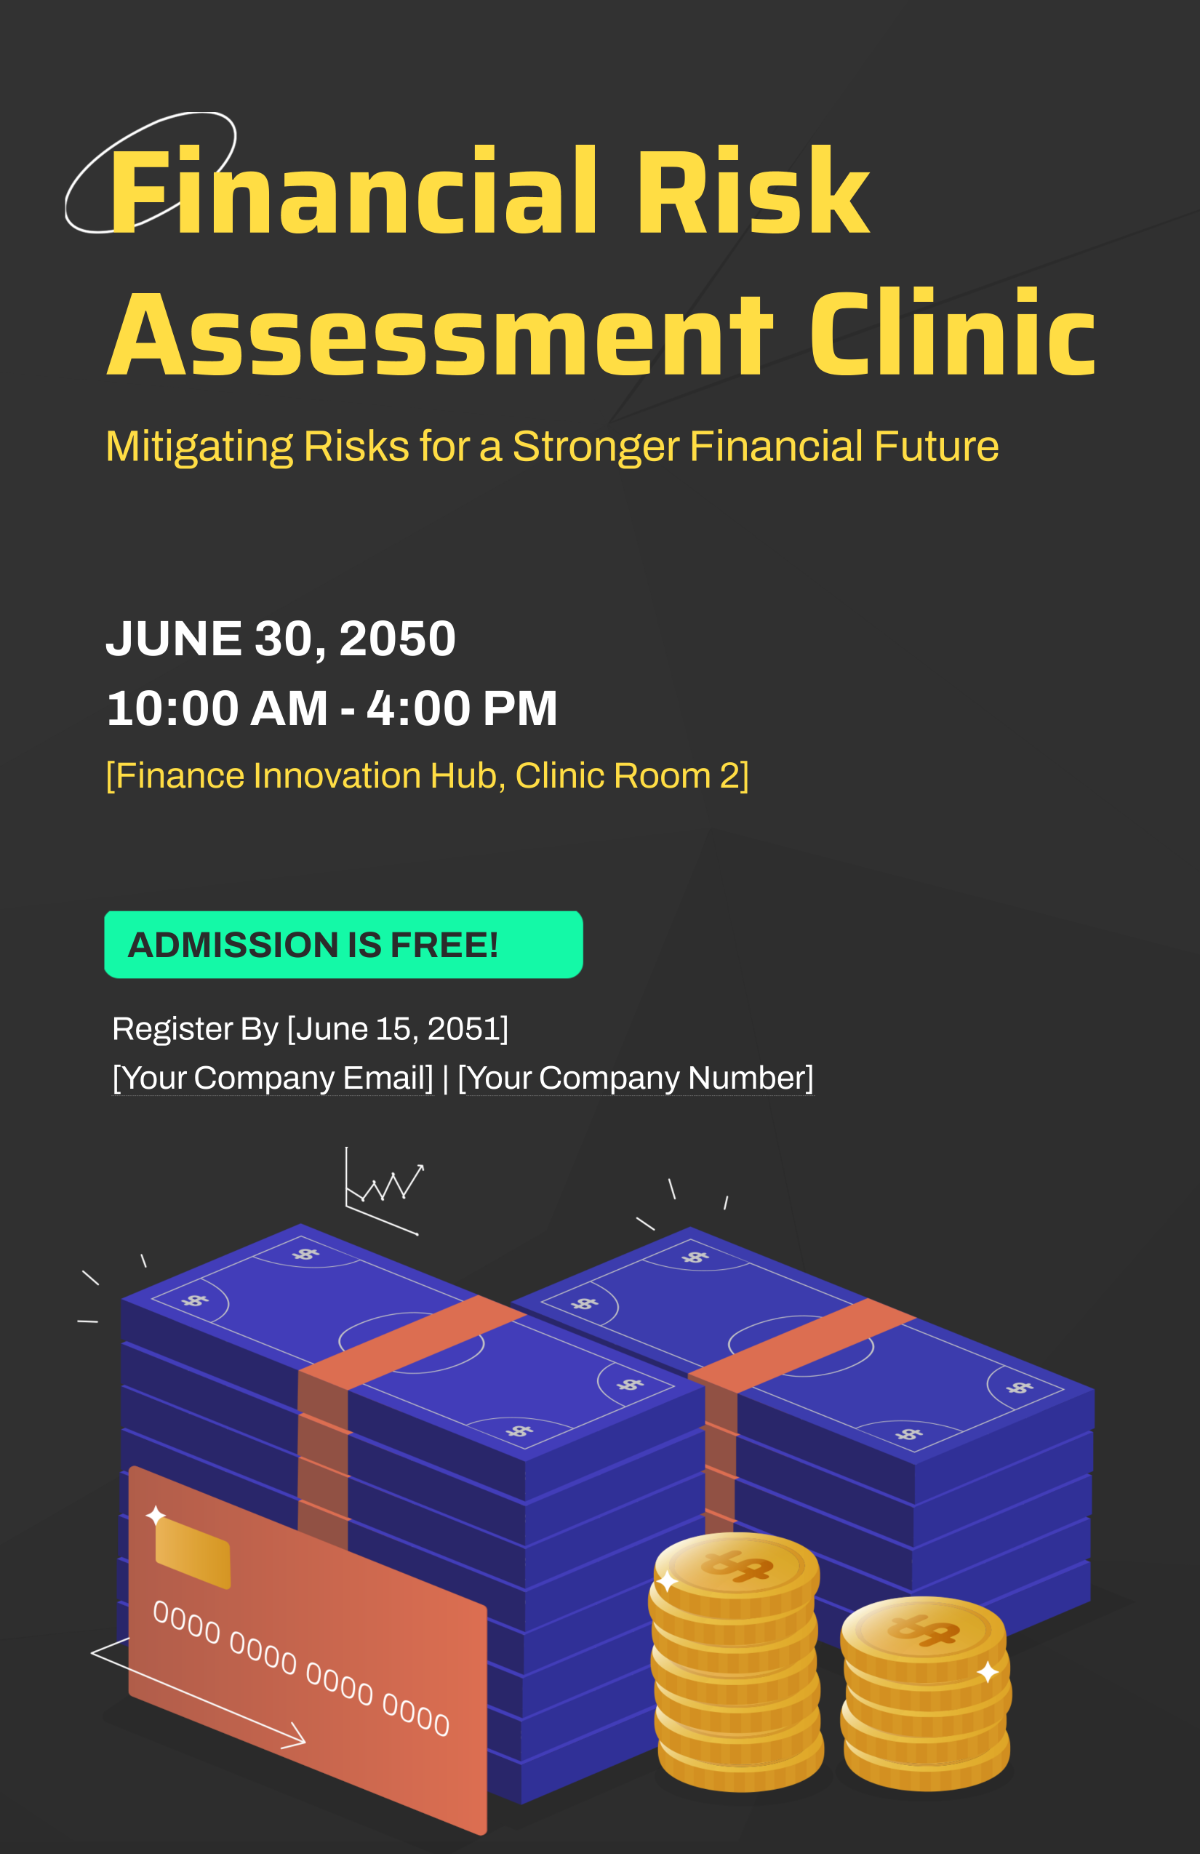 Financial Risk Assessment Clinic Poster